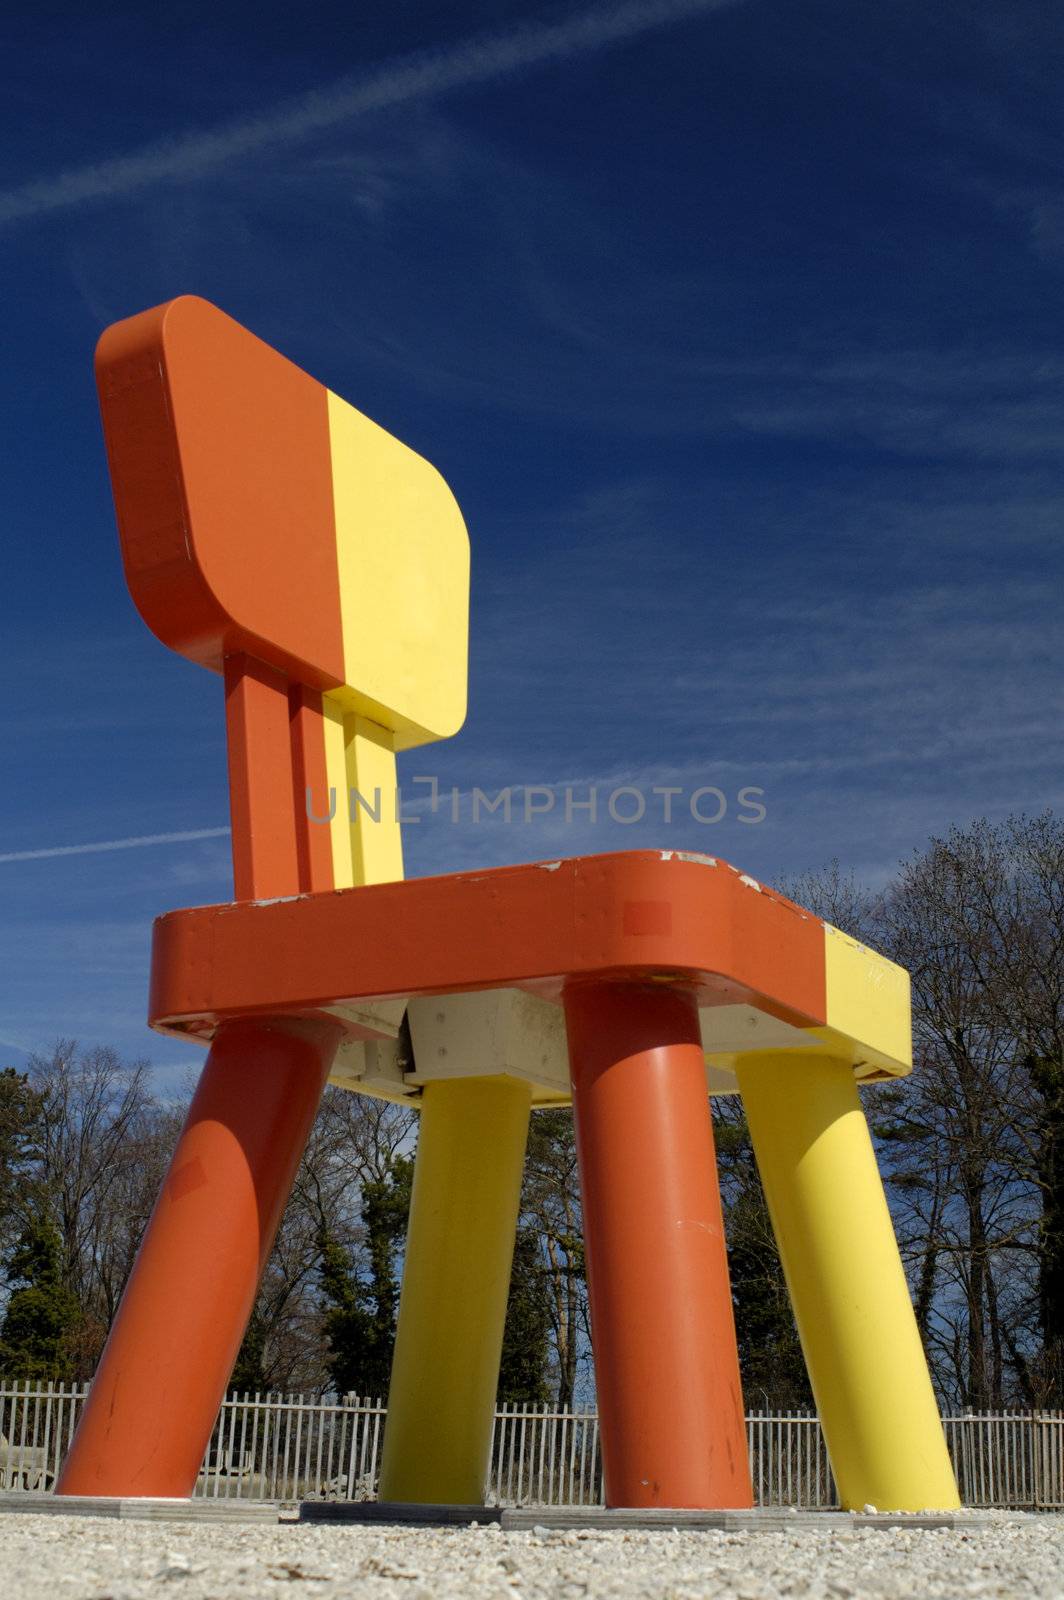 Giant chair by Bateleur